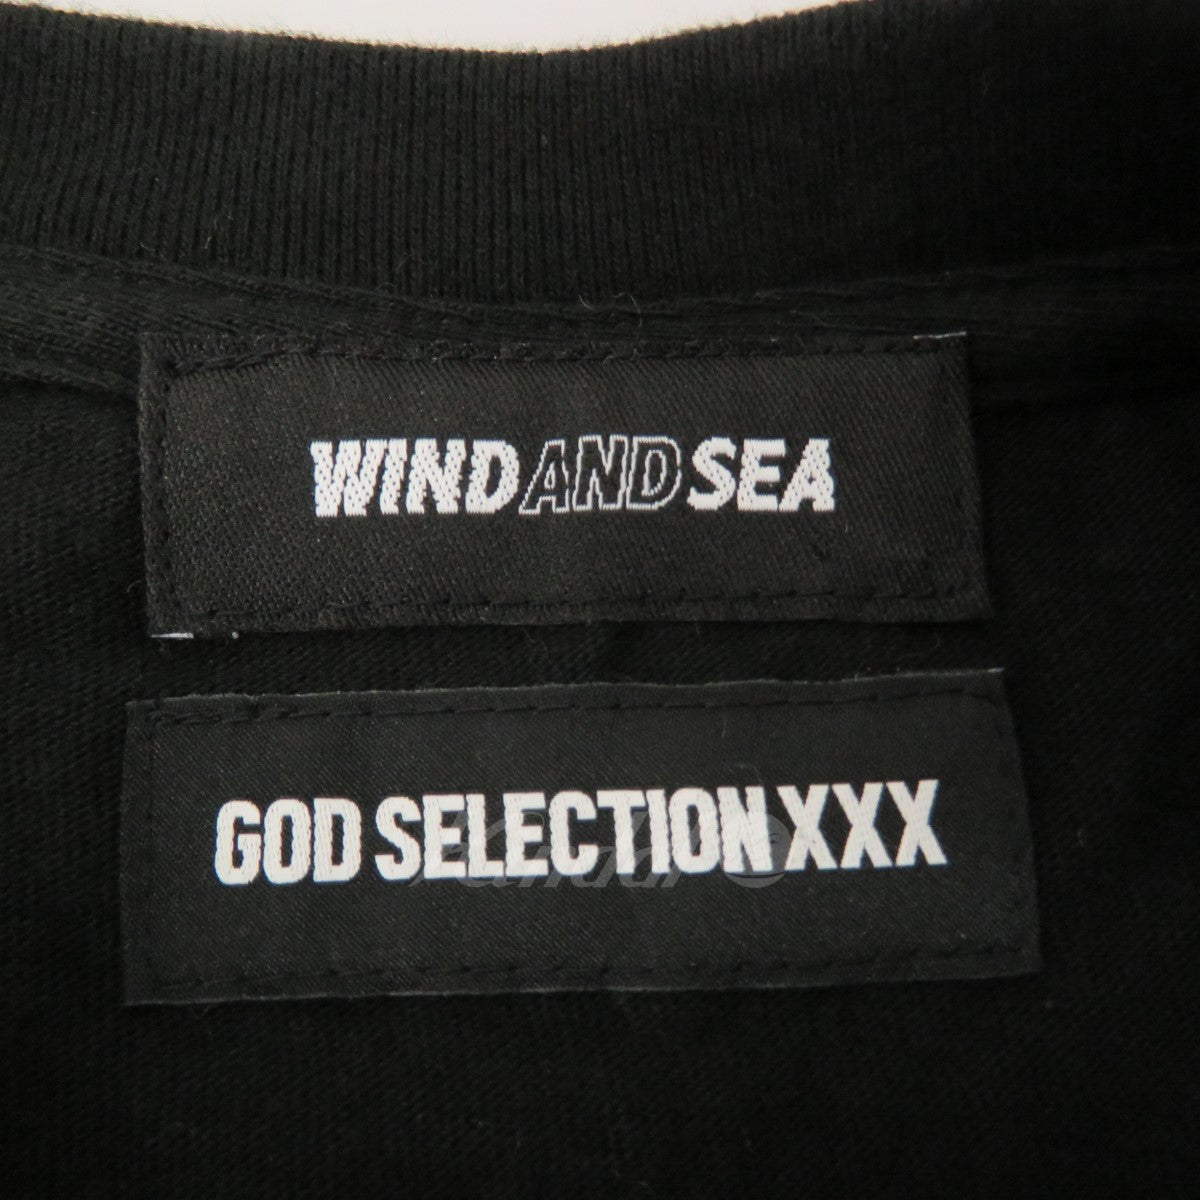 WIND AND SEA◇GOD SELECTION XXX/スウェット/M/コットン/カーキ/WDS-XXX-21A-04 - メンズファッション